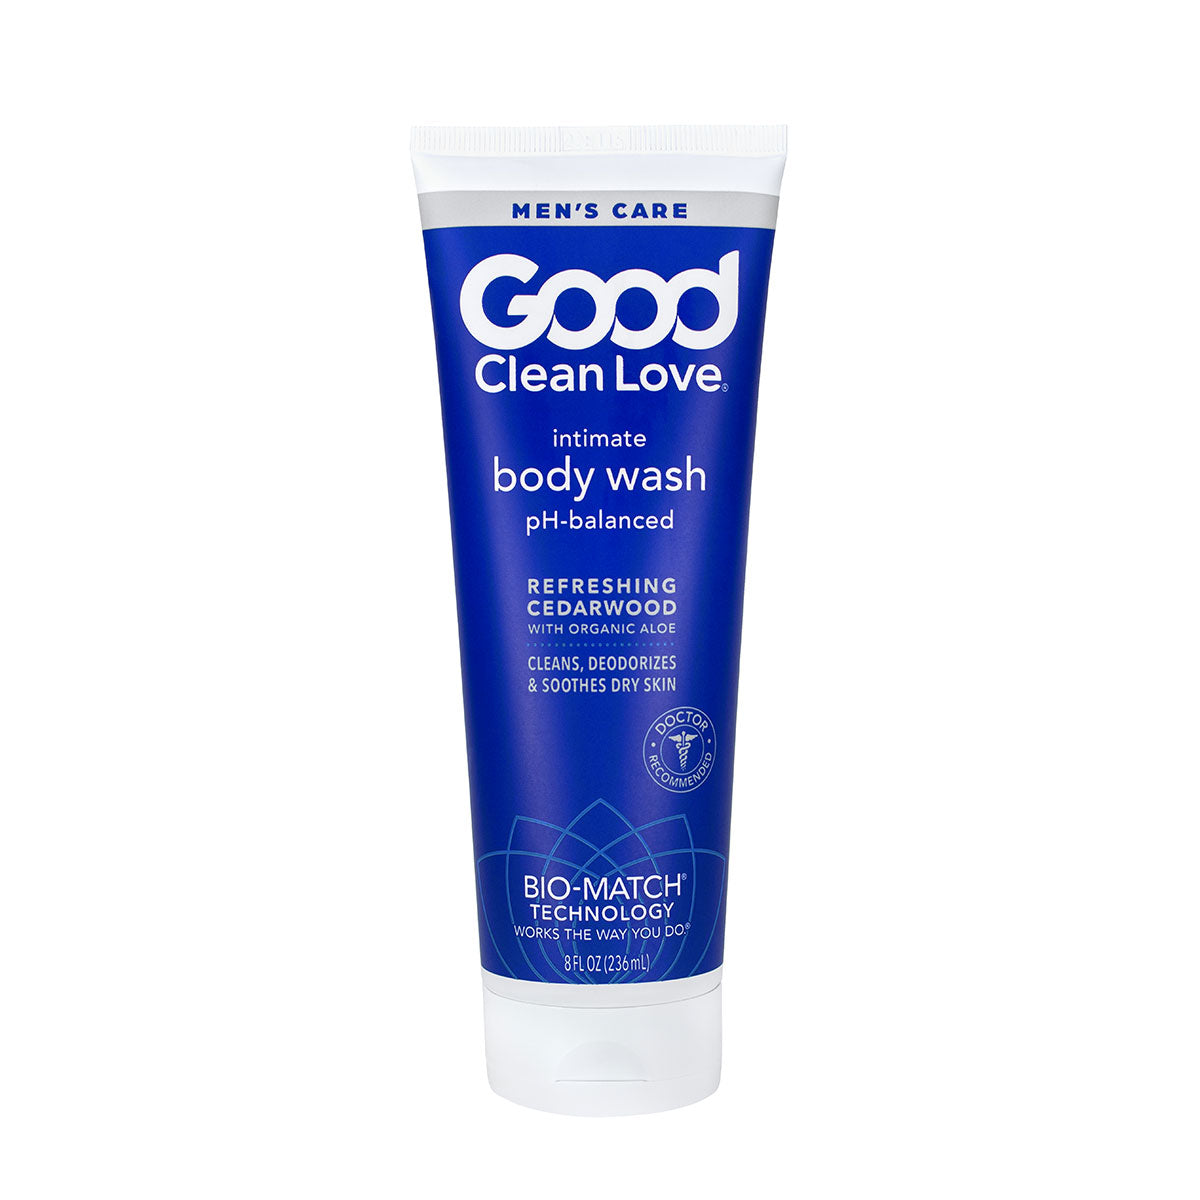 Good Clean Love Men's Intimate Body Wash